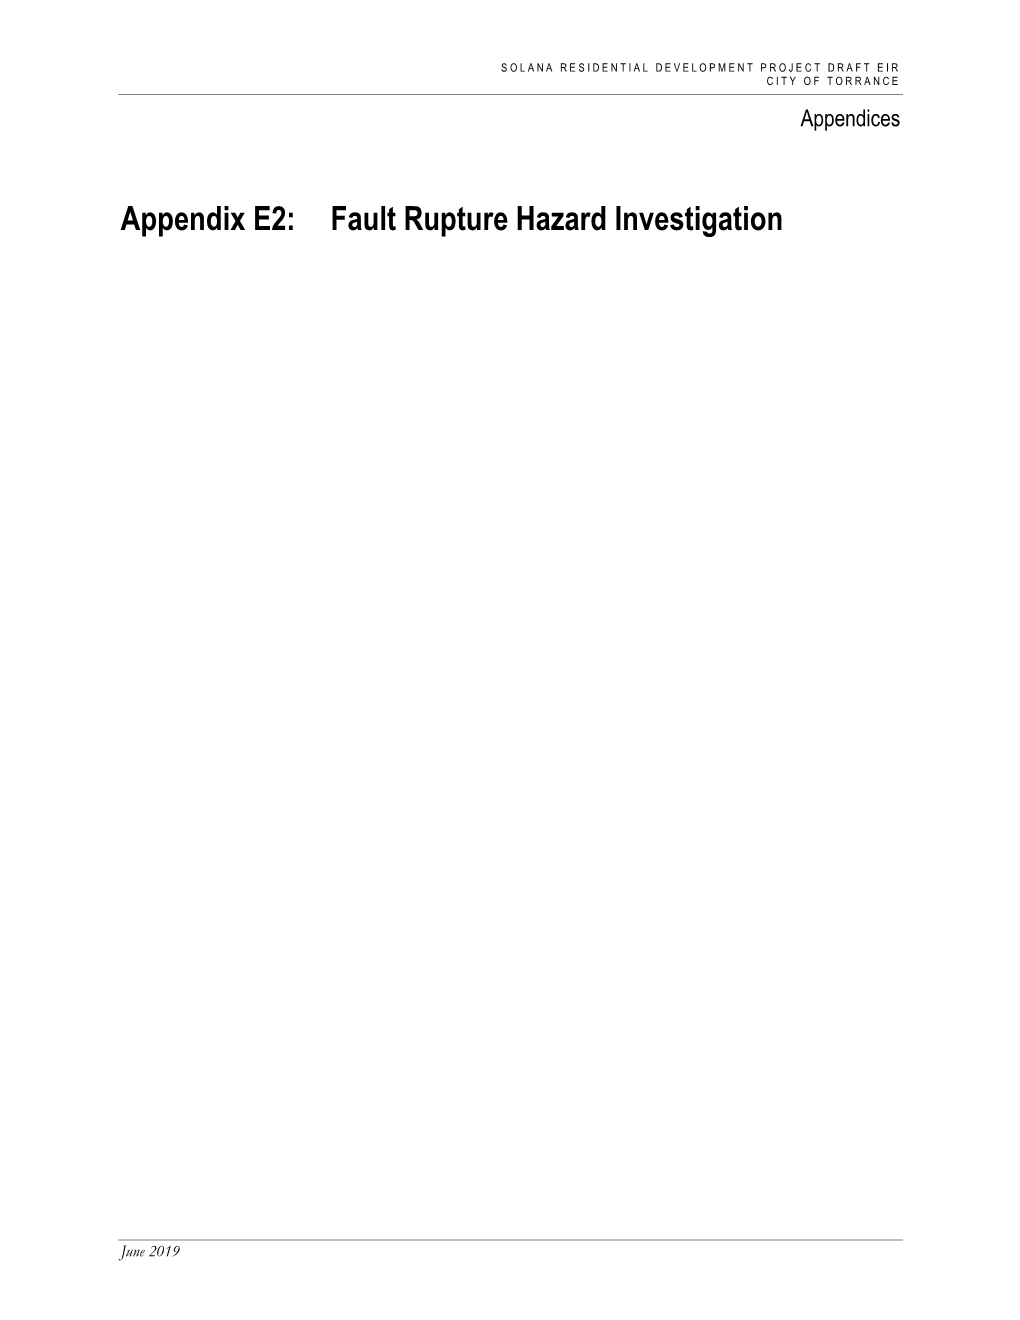 Appendix E2: Fault Rupture Hazard Investigation